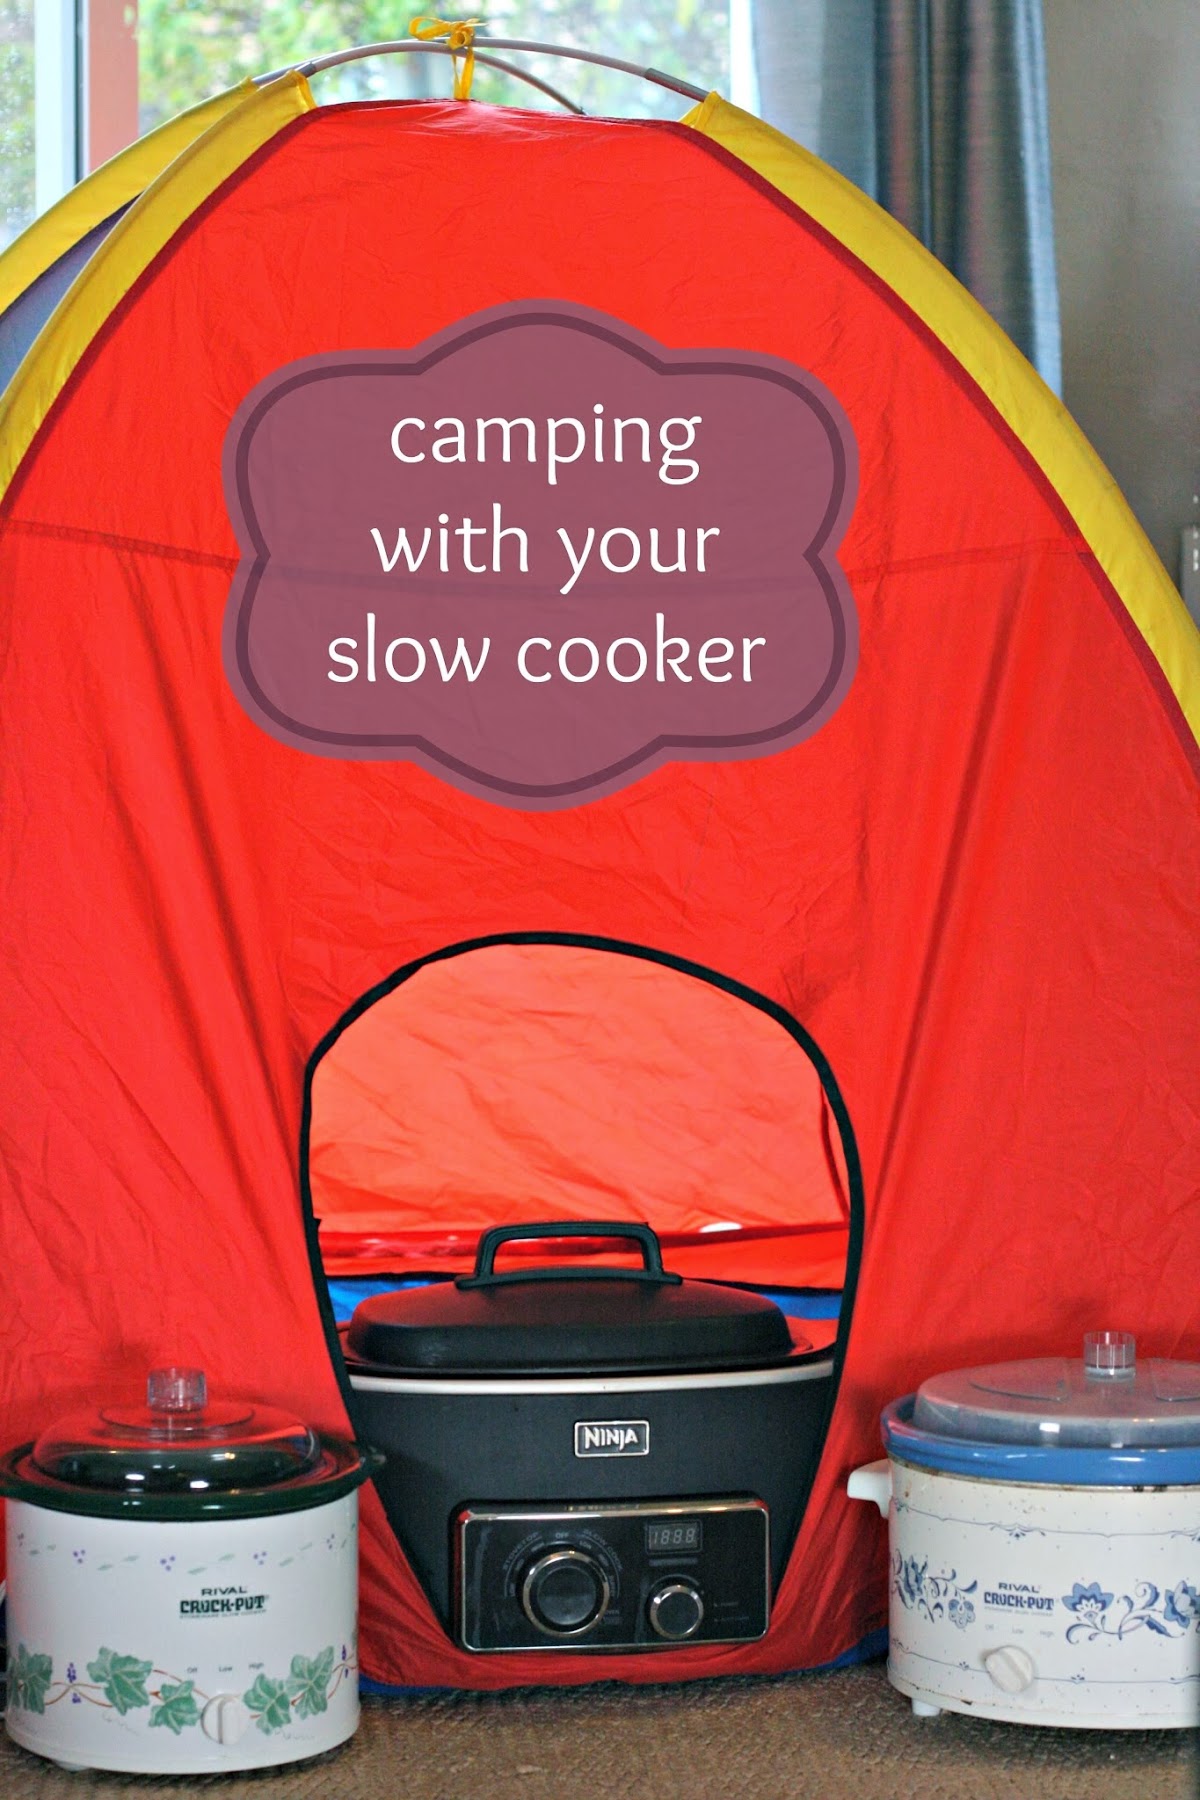 Easy Camping Crockpot Meals - Seeking The RV Life